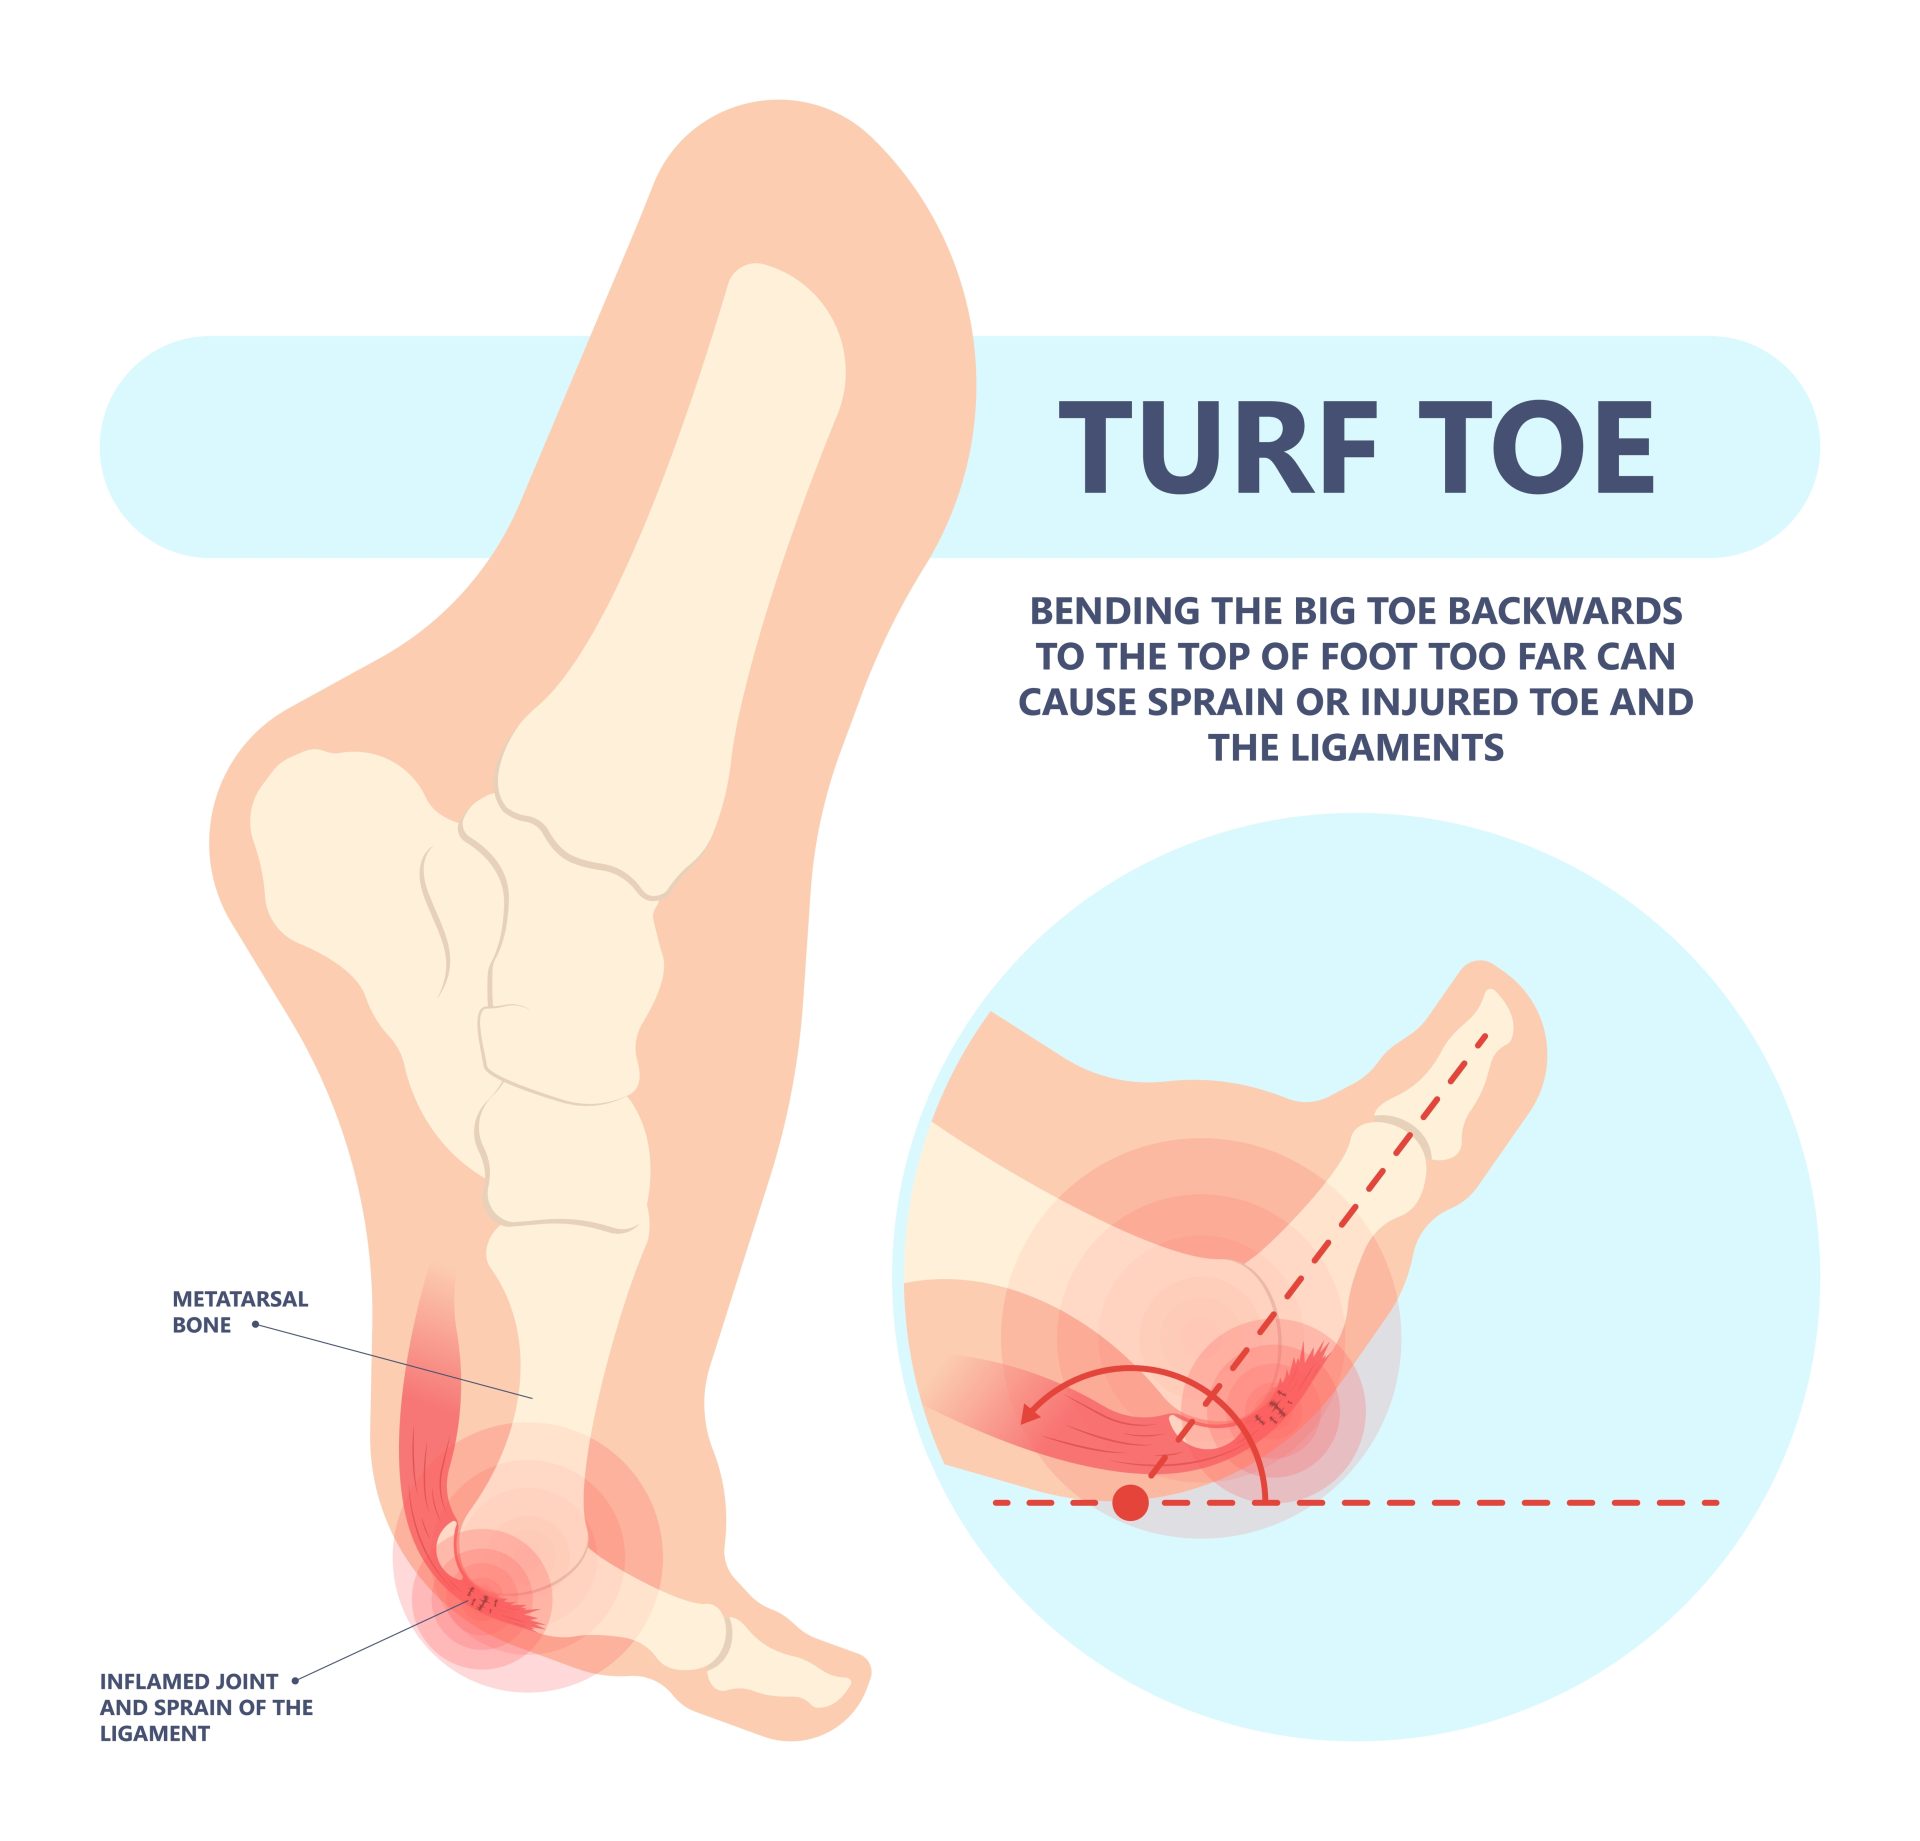 Medical illustration showing turf toe